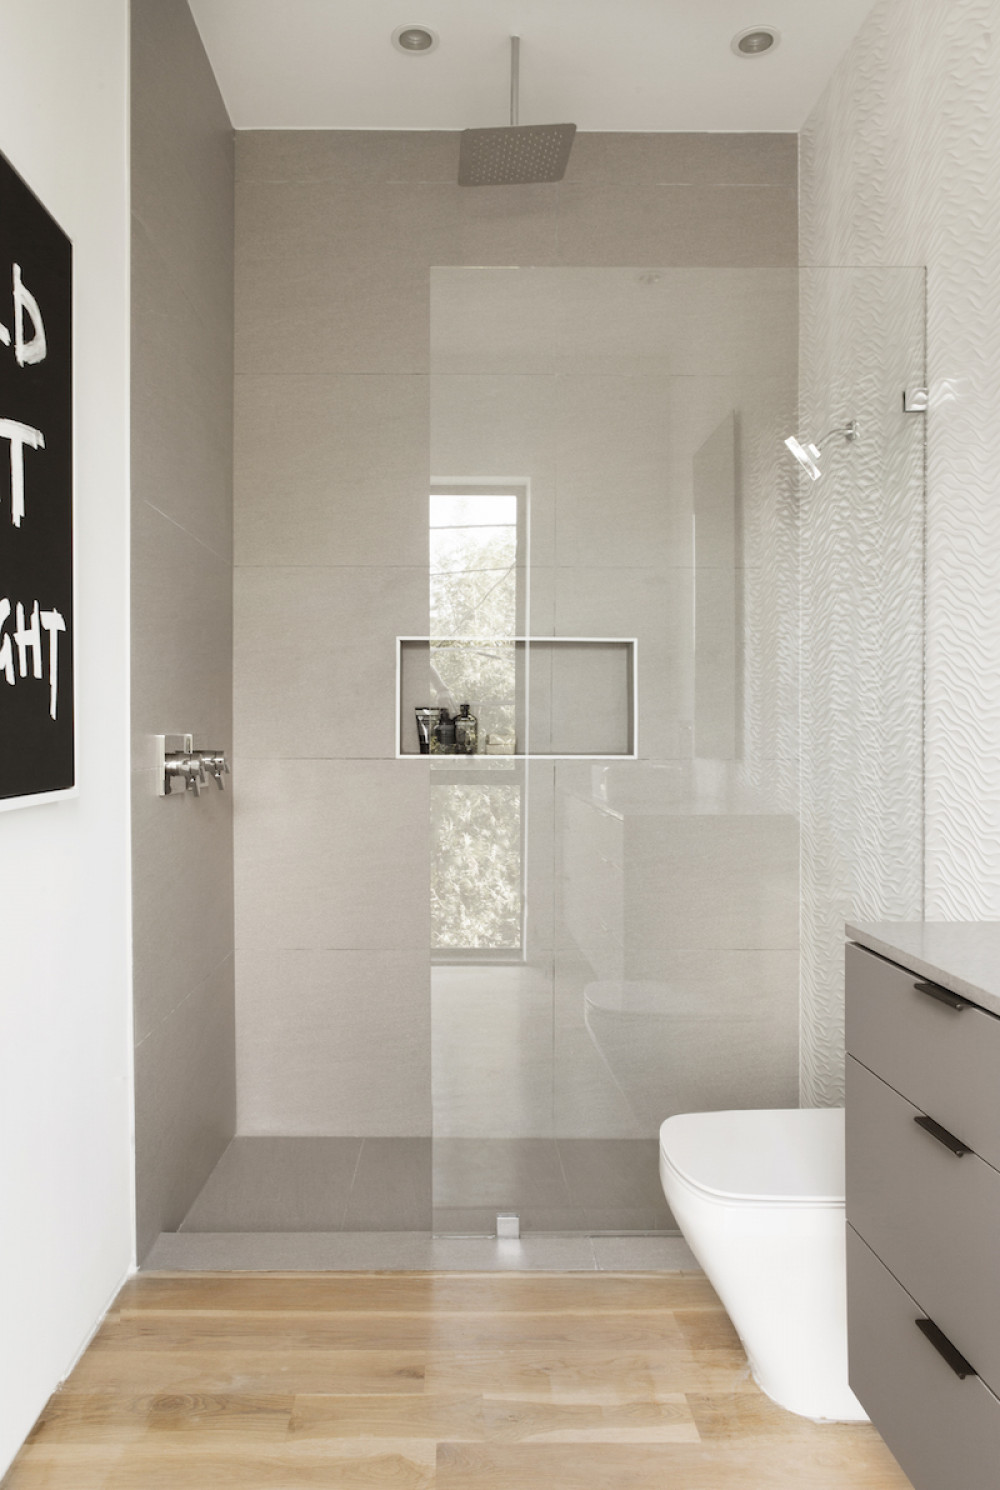 beyond-id-bathroom-design-half-shower-wall-glass